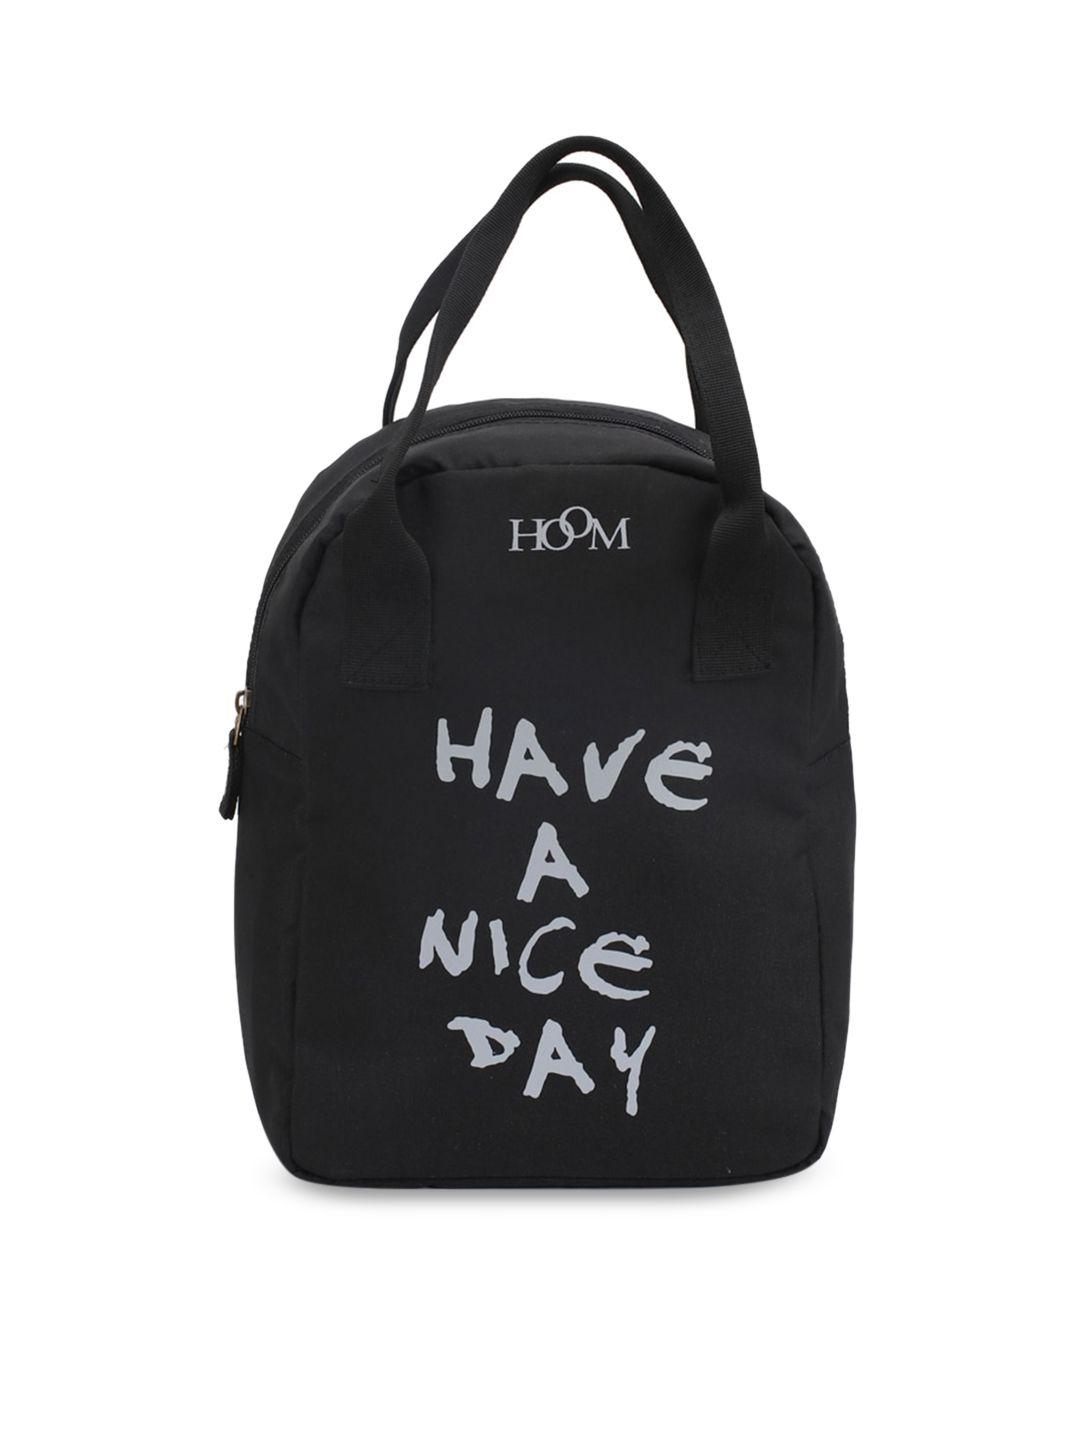 hoom black & grey printed lunch bag travel accessory